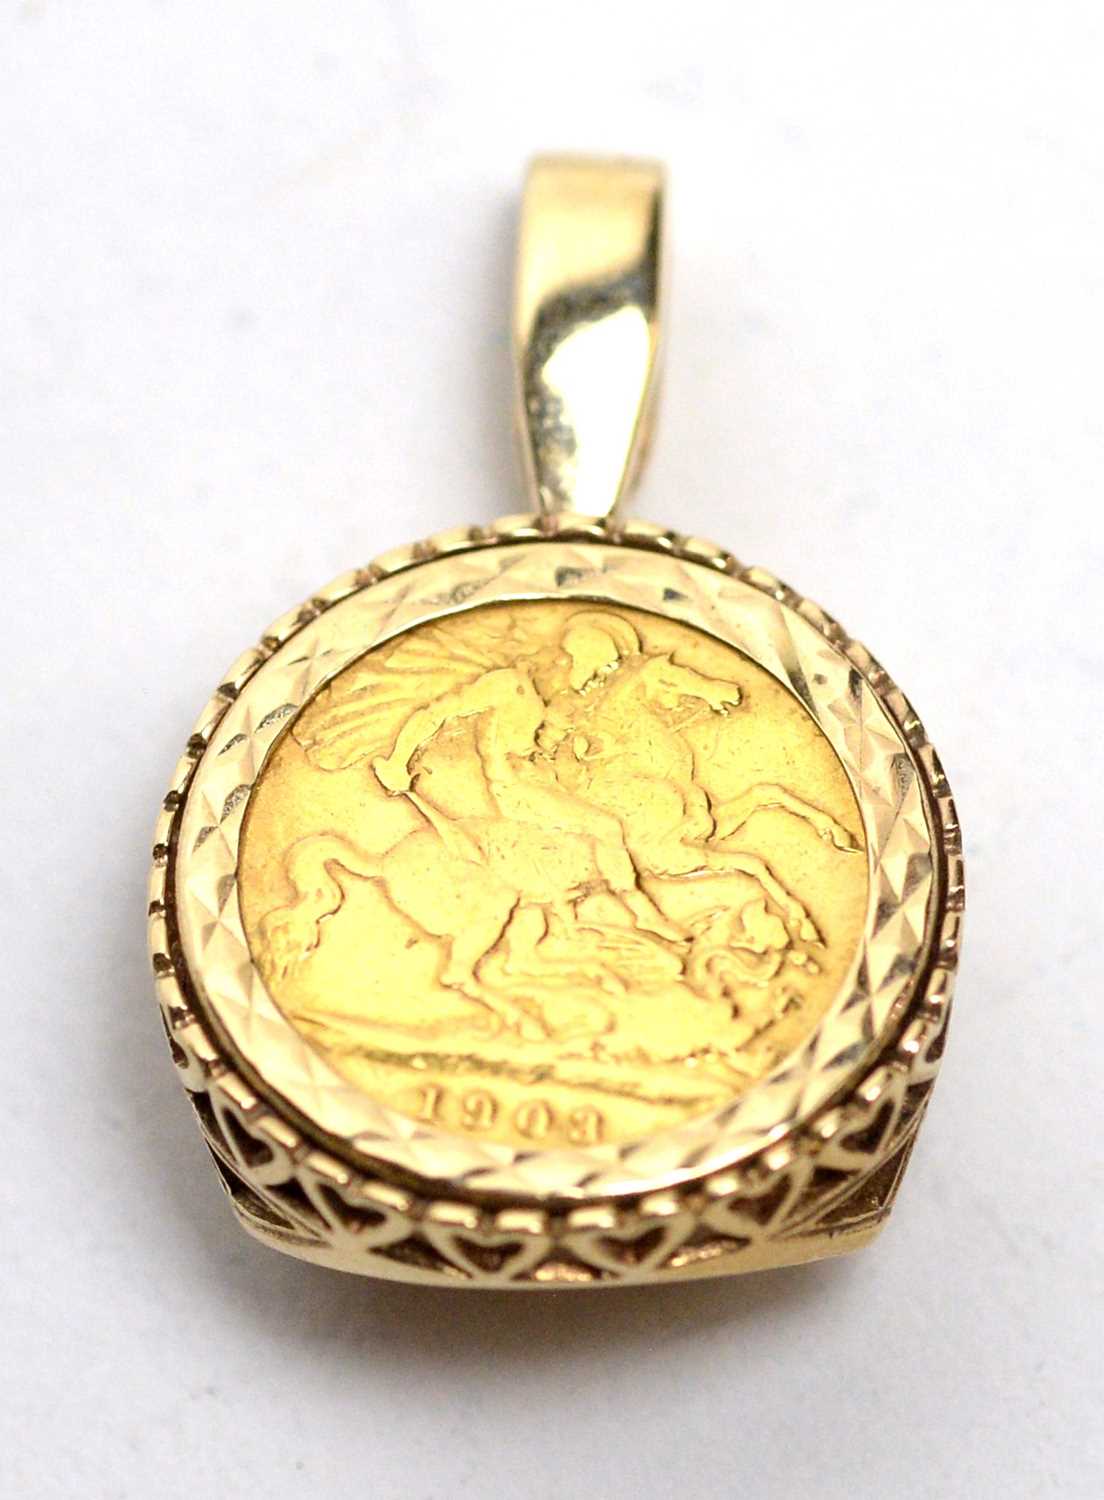 Lot 242 - An Edward VII gold half sovereign pendant